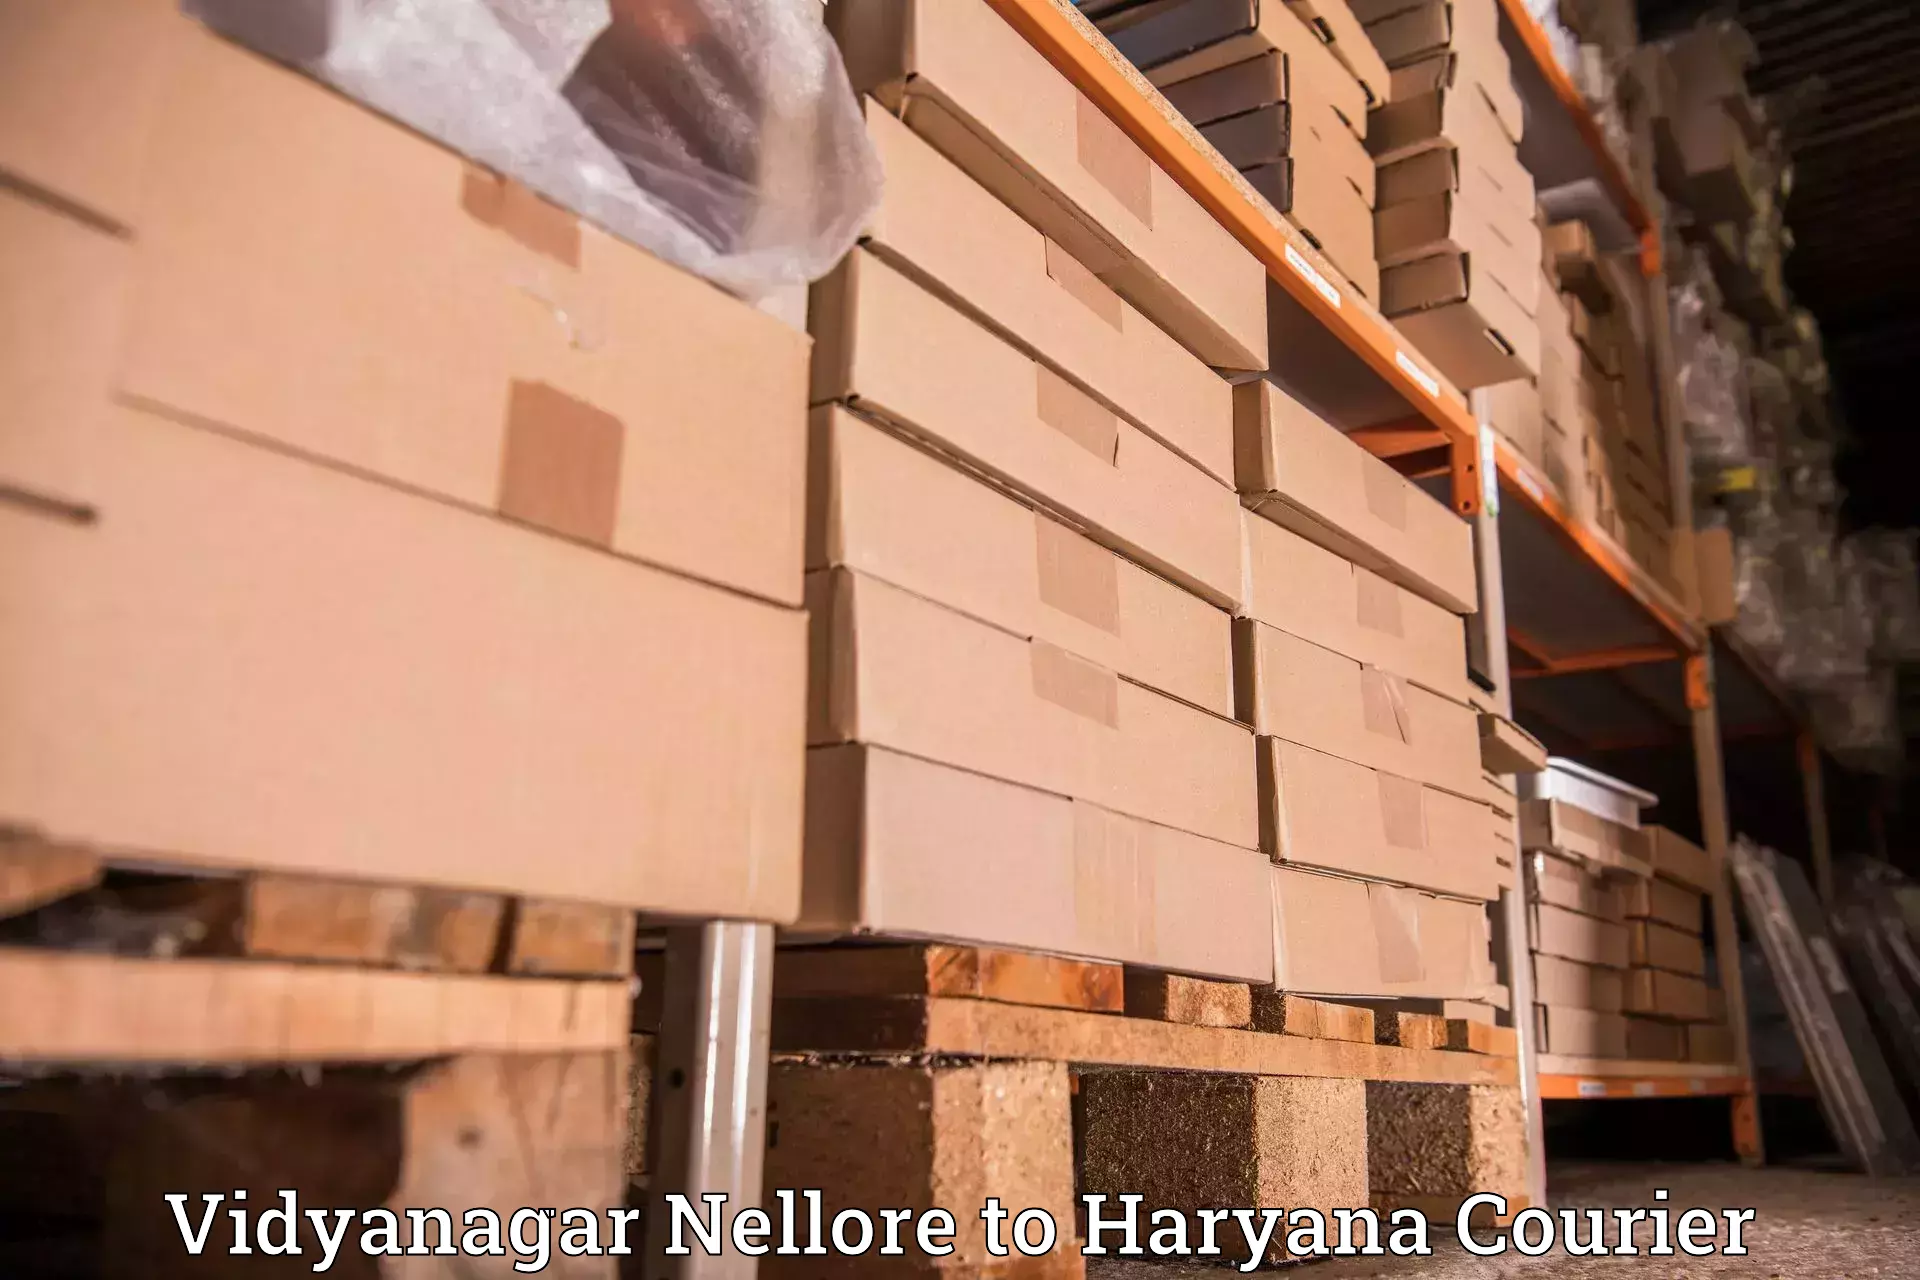 High-performance logistics Vidyanagar Nellore to Haryana